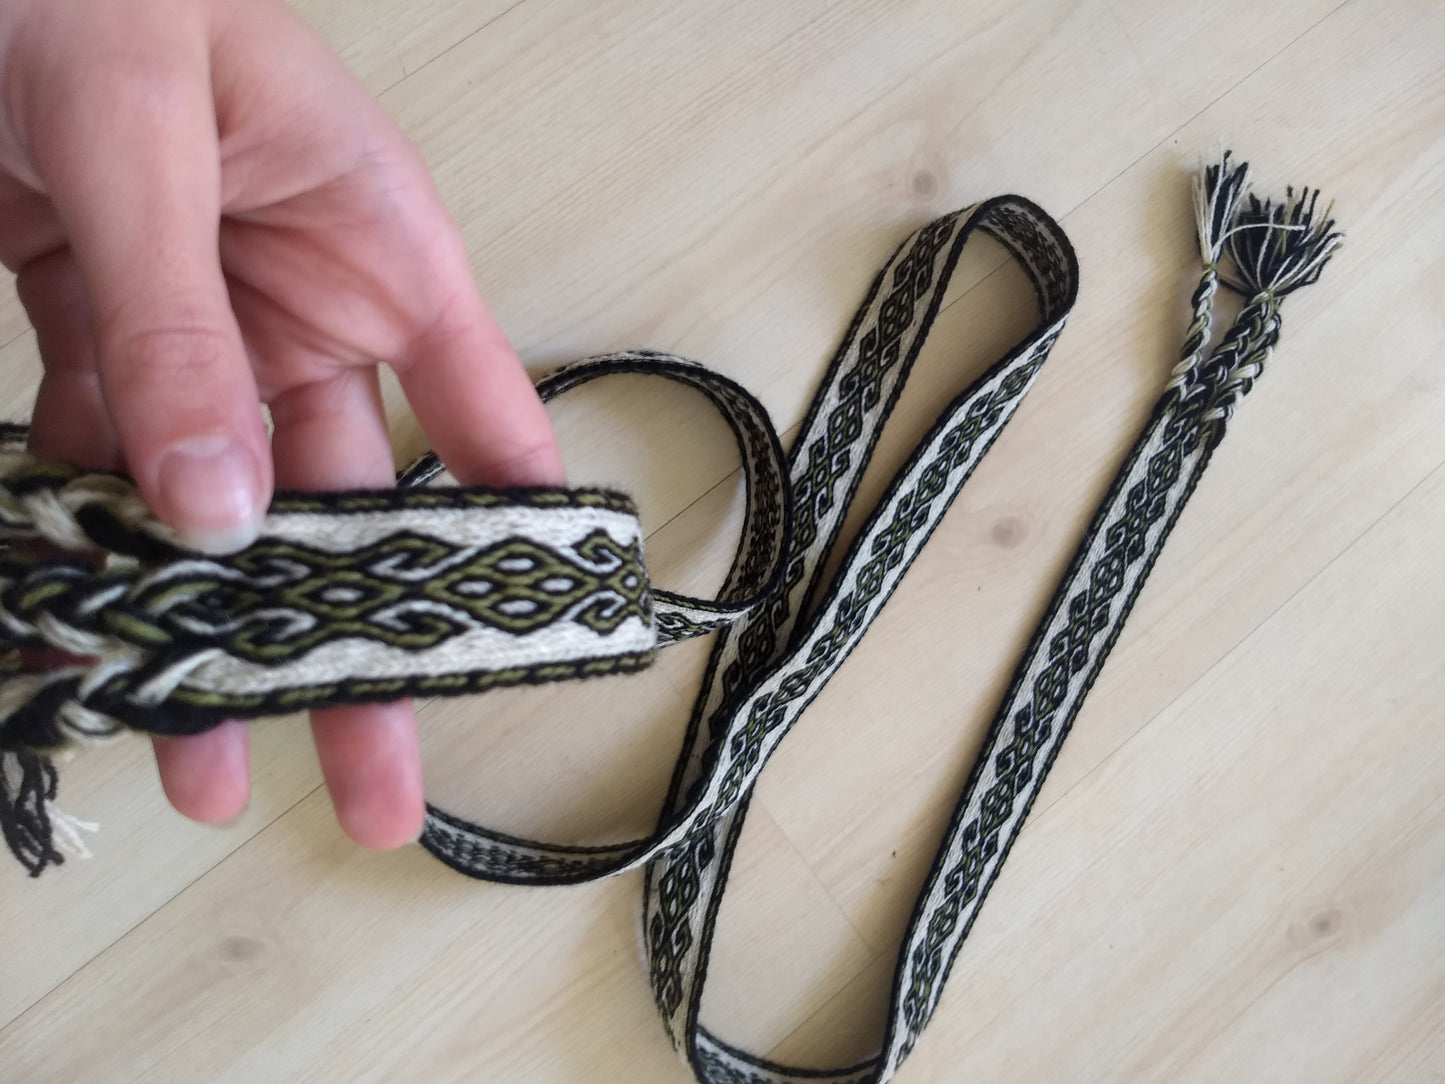 Made to order - Norwegian belt with elaborate kivrim pattern